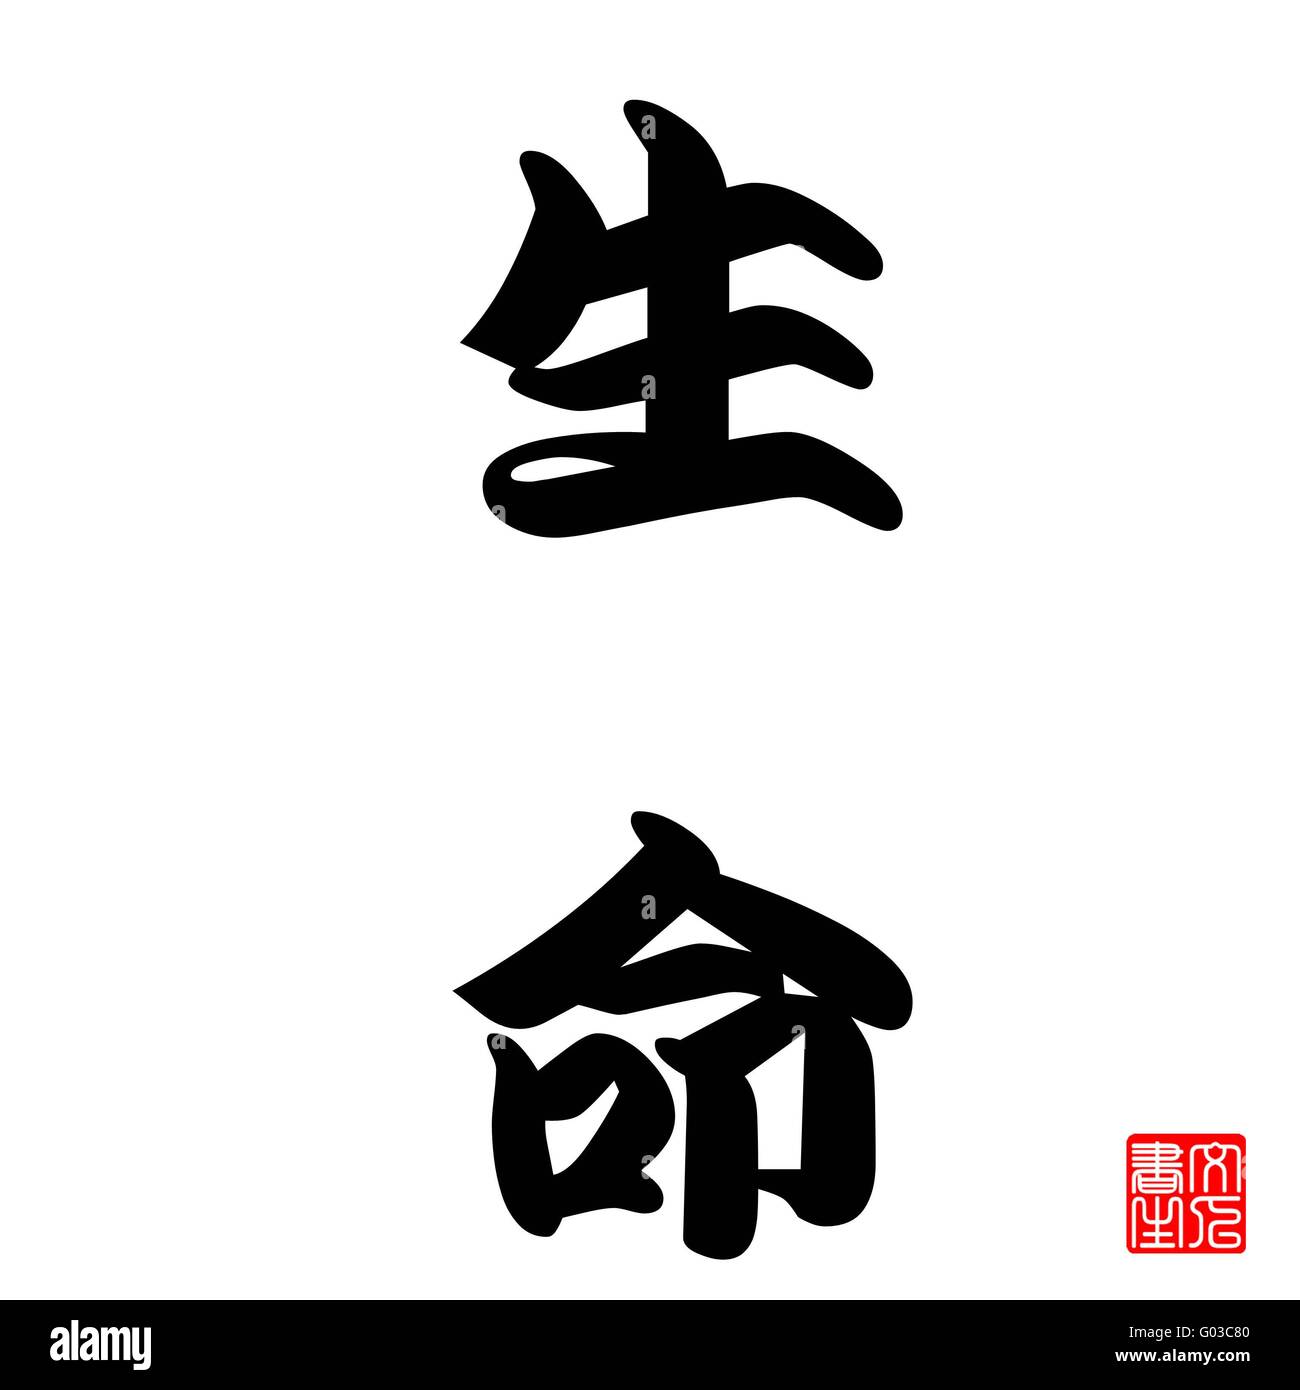 Japanese Calligraphy represents Life Stock Photo